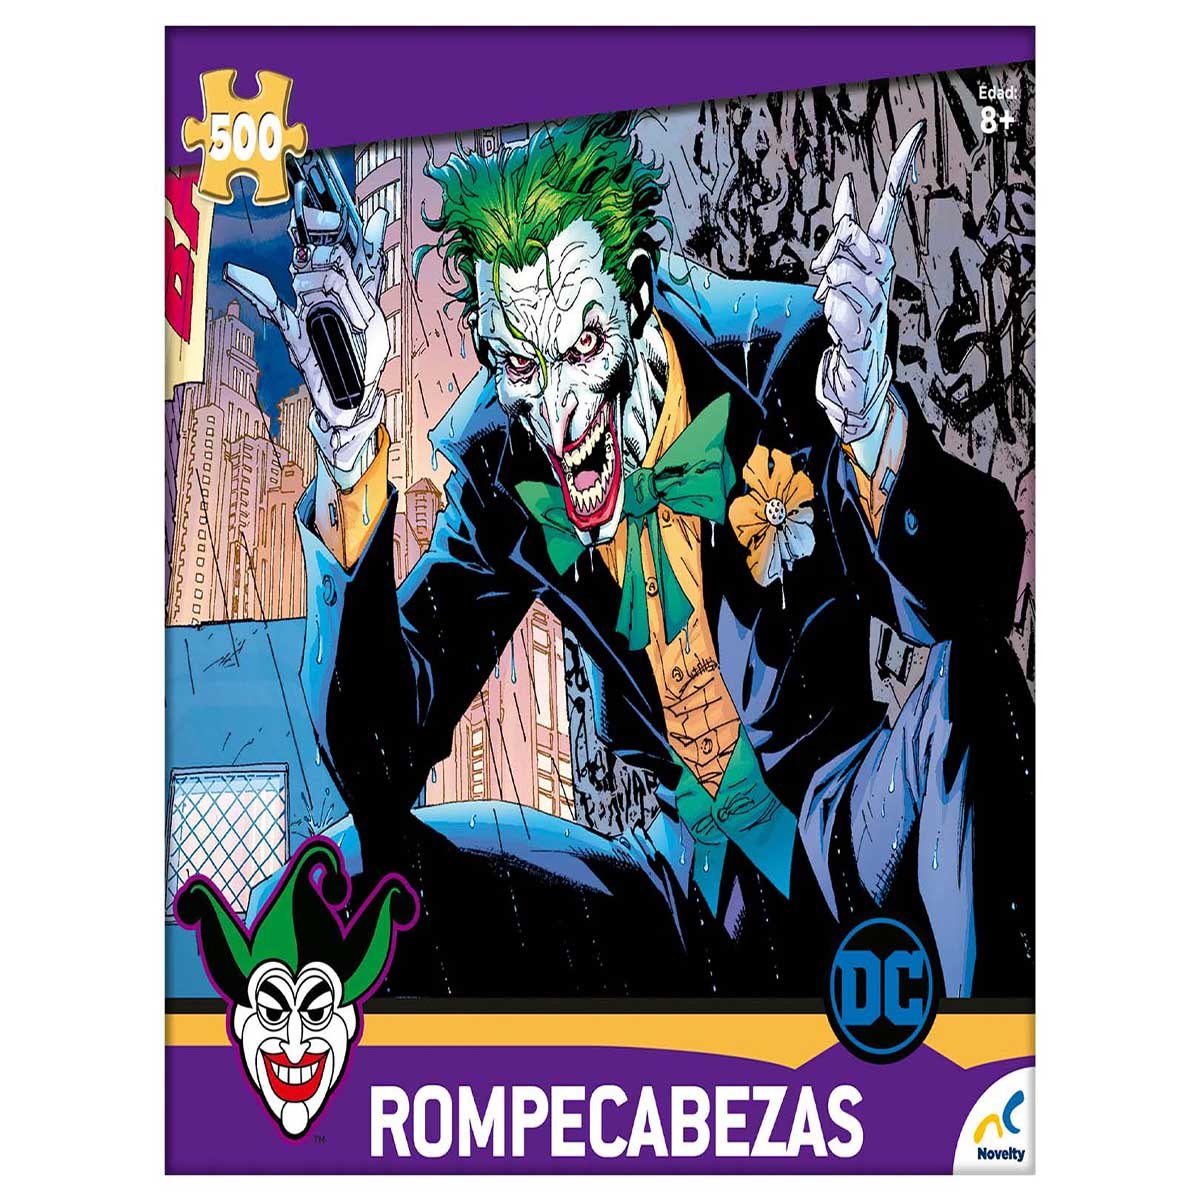 Rompecabezas Coleccionable The Joker Dc Comics Novelty